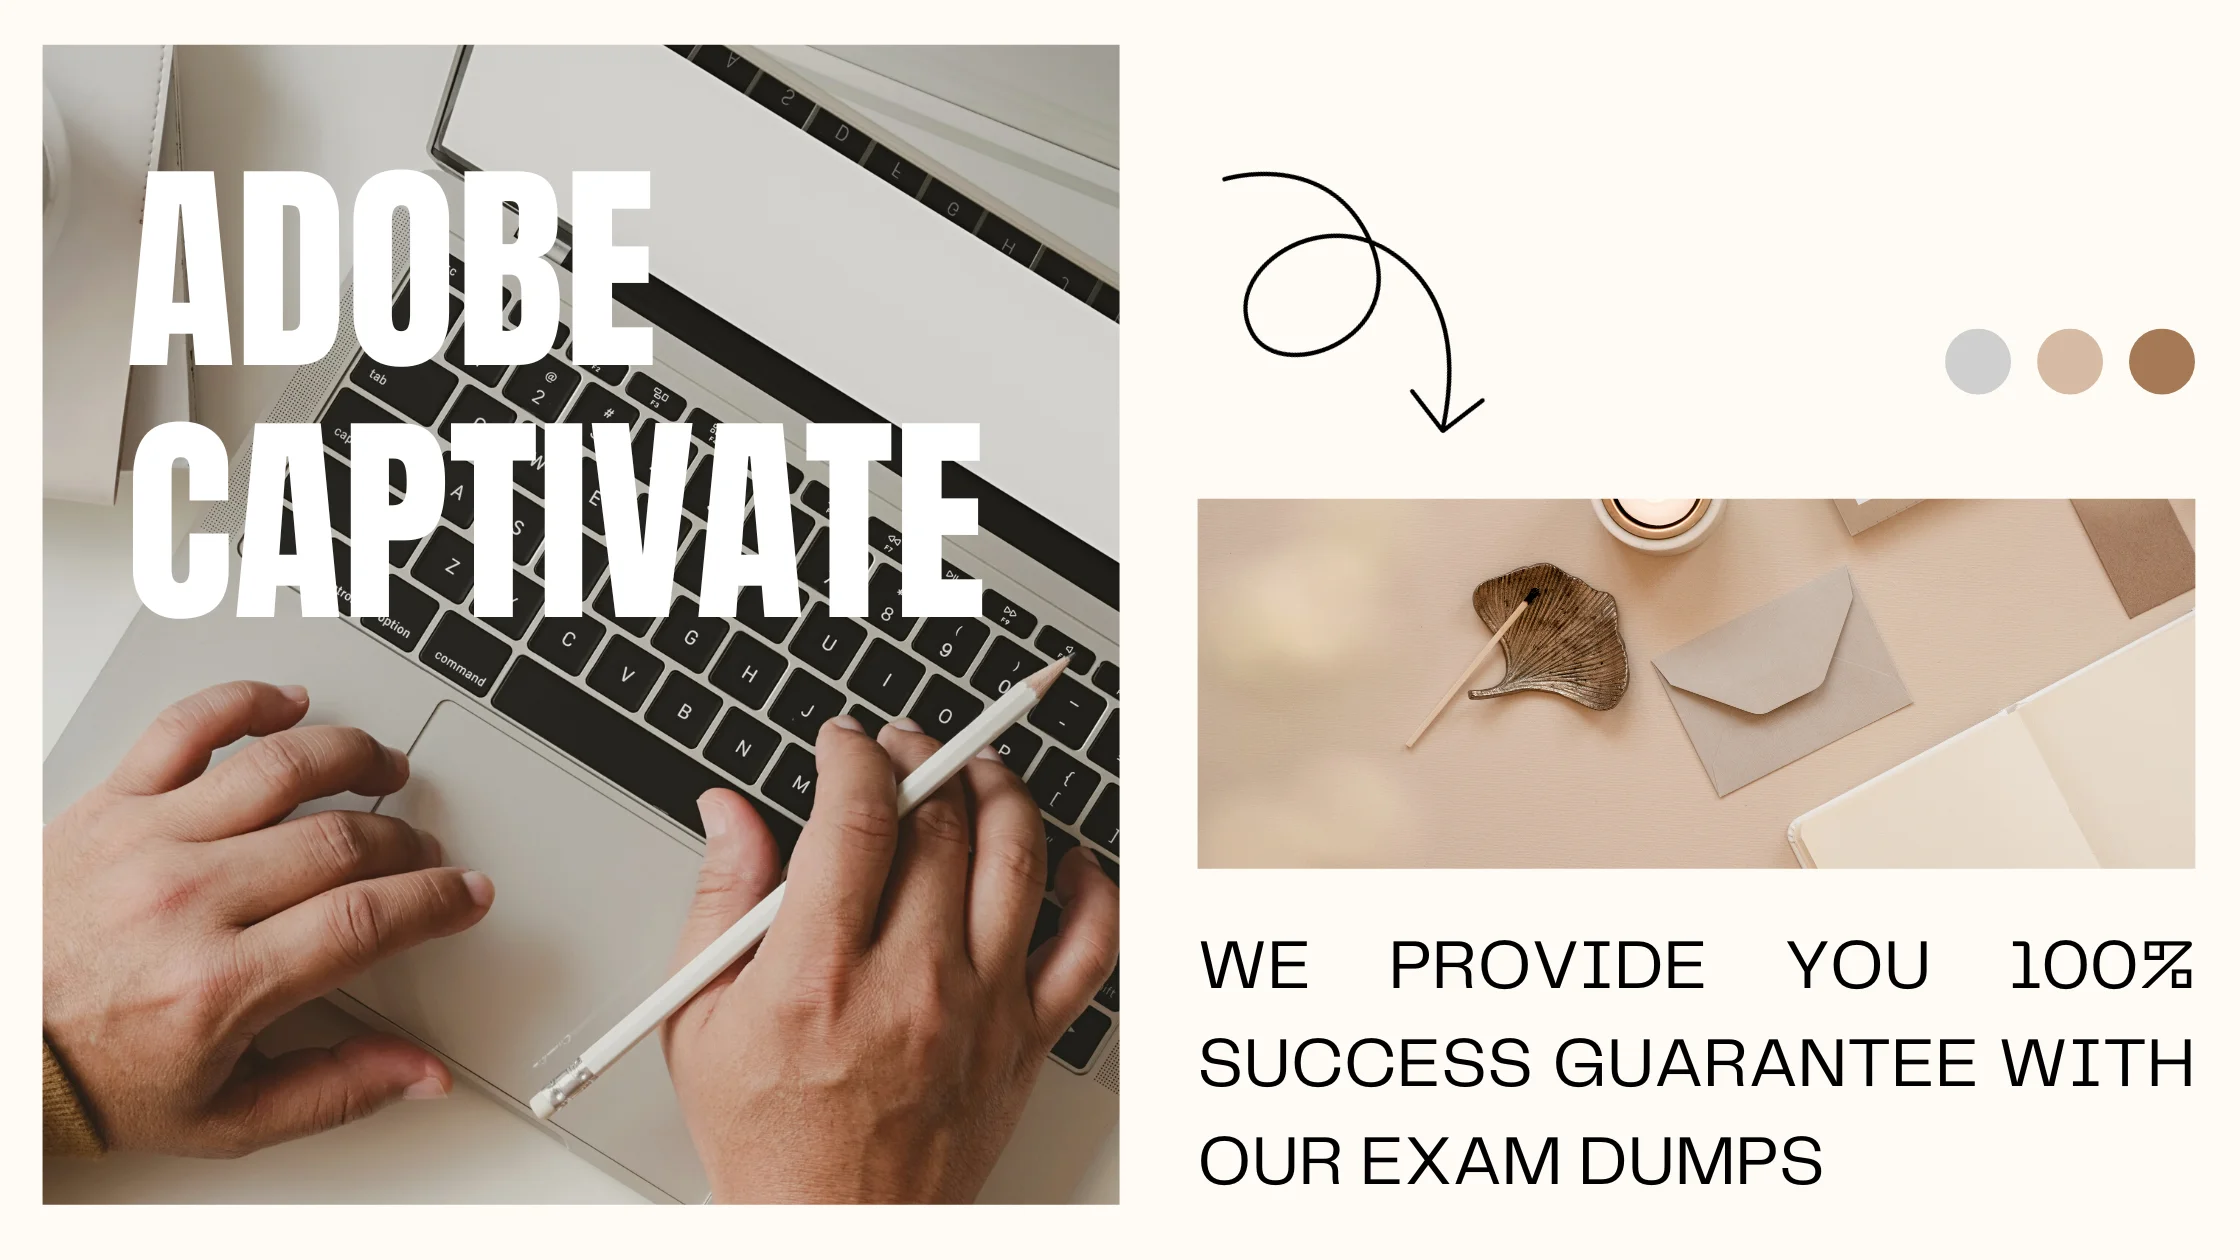 Adobe Captivate Certification Practice Exam guarantee